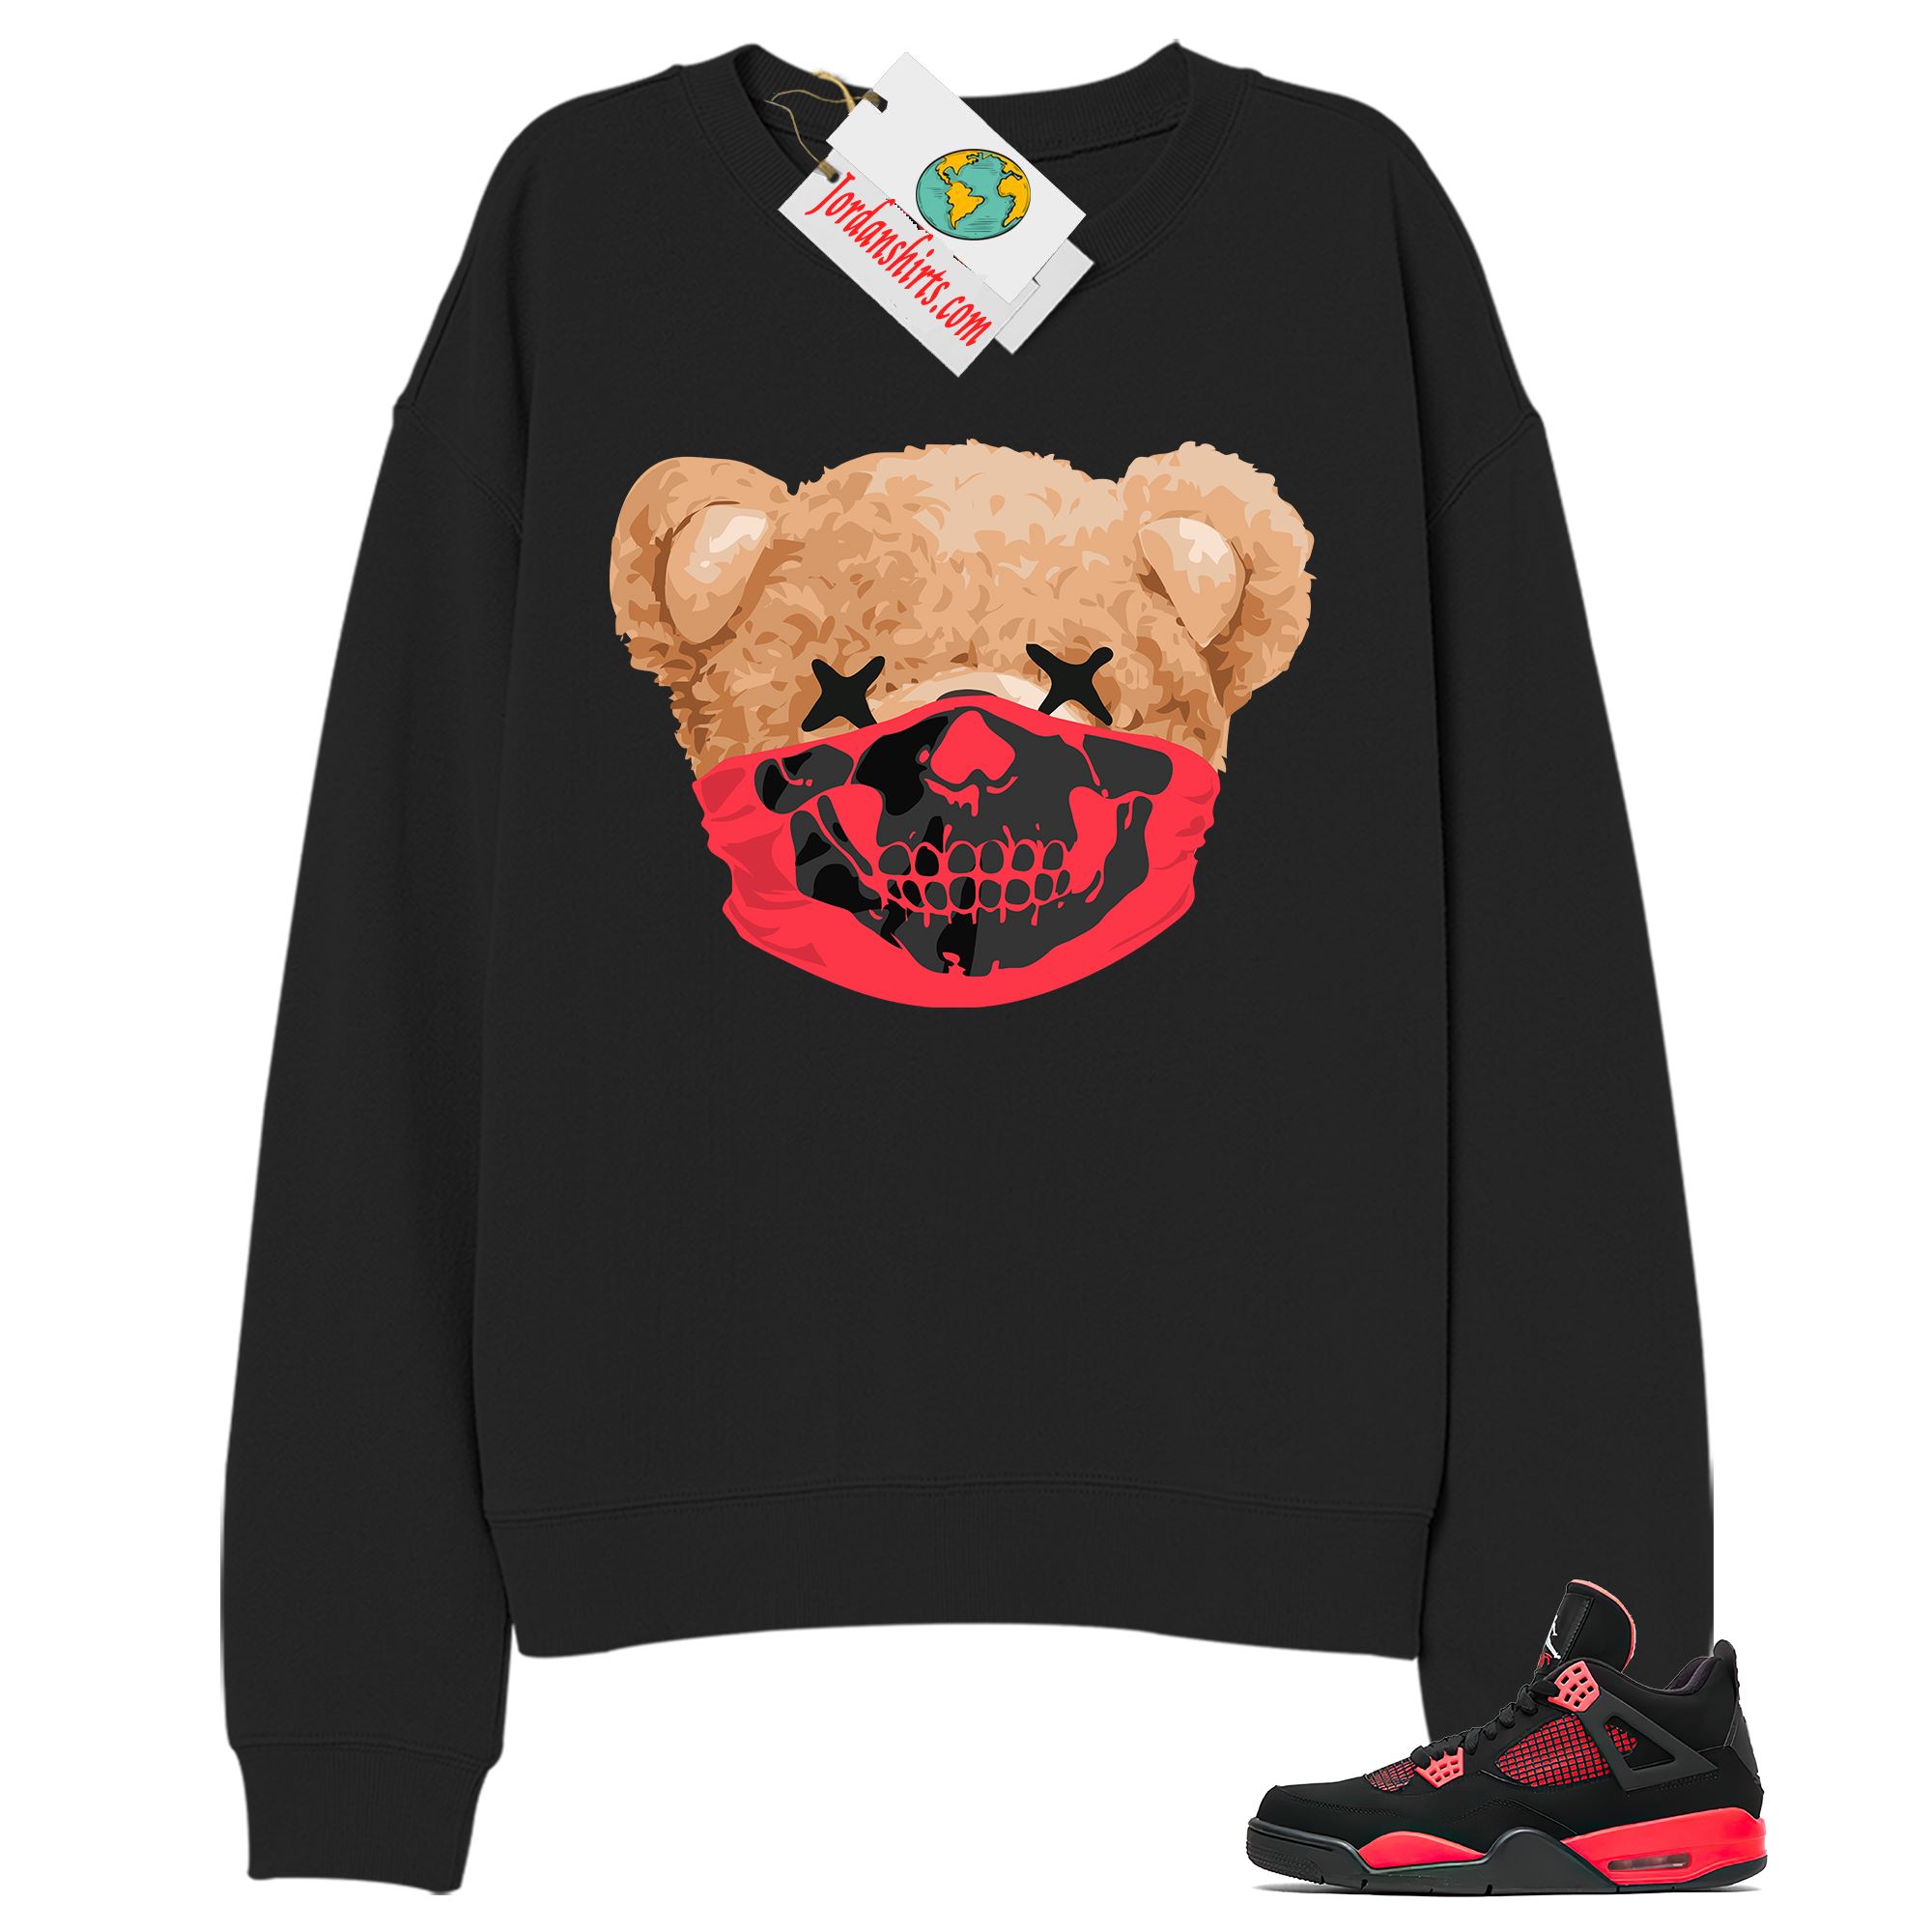 Jordan 4 Sweatshirt, Teddy Bear Skull Bandana Black Sweatshirt Air Jordan 4 Red Thunder 4s Size Up To 5xl